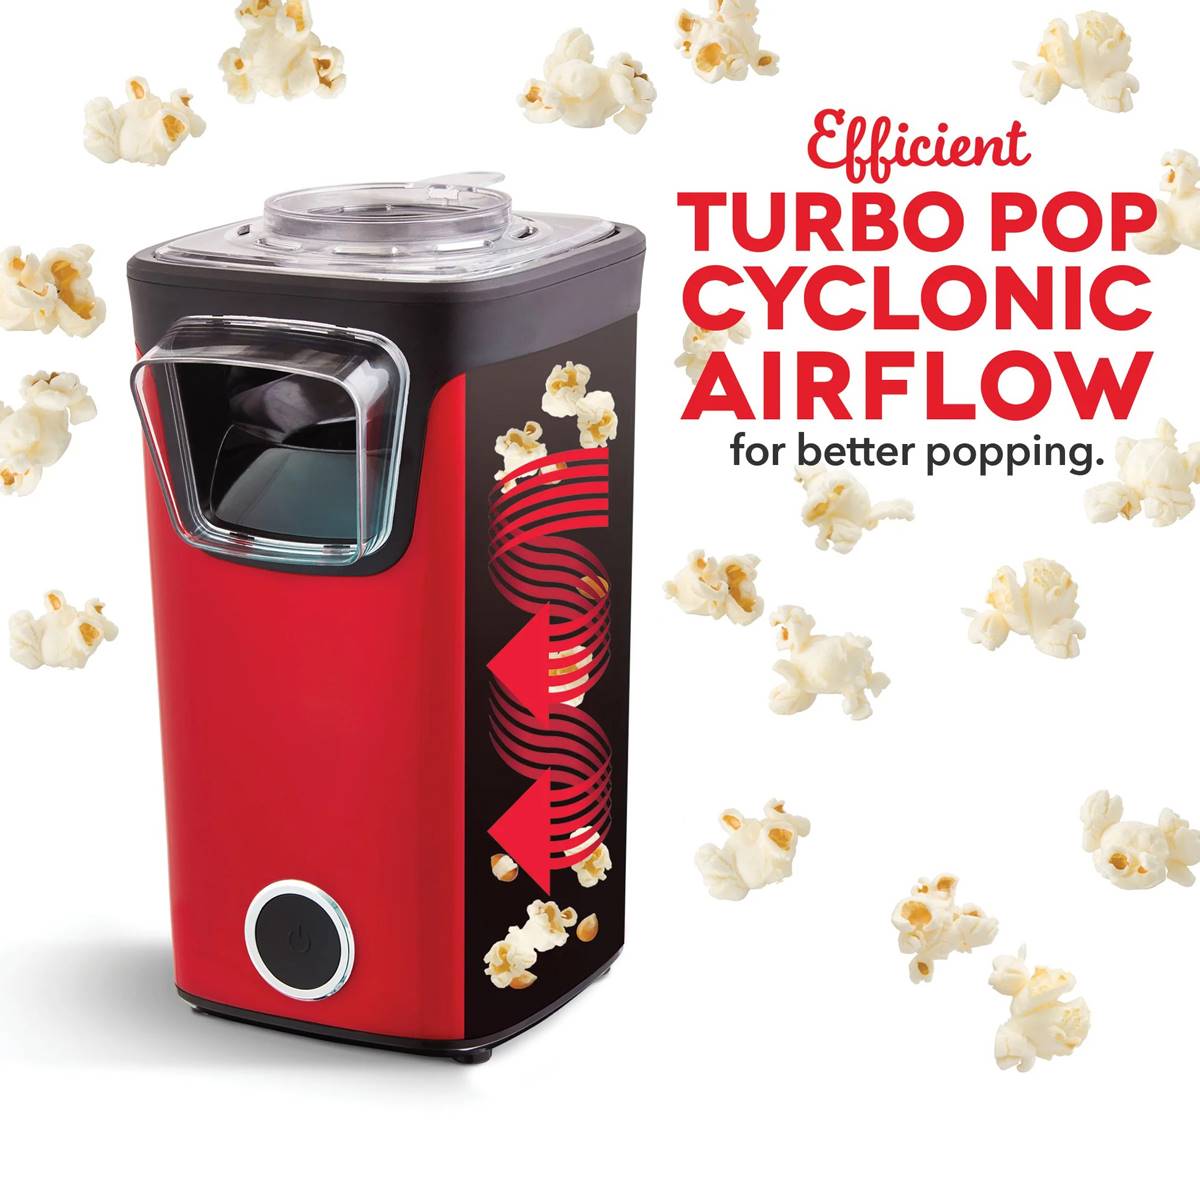 Dash Turbo POP Popcorn Maker